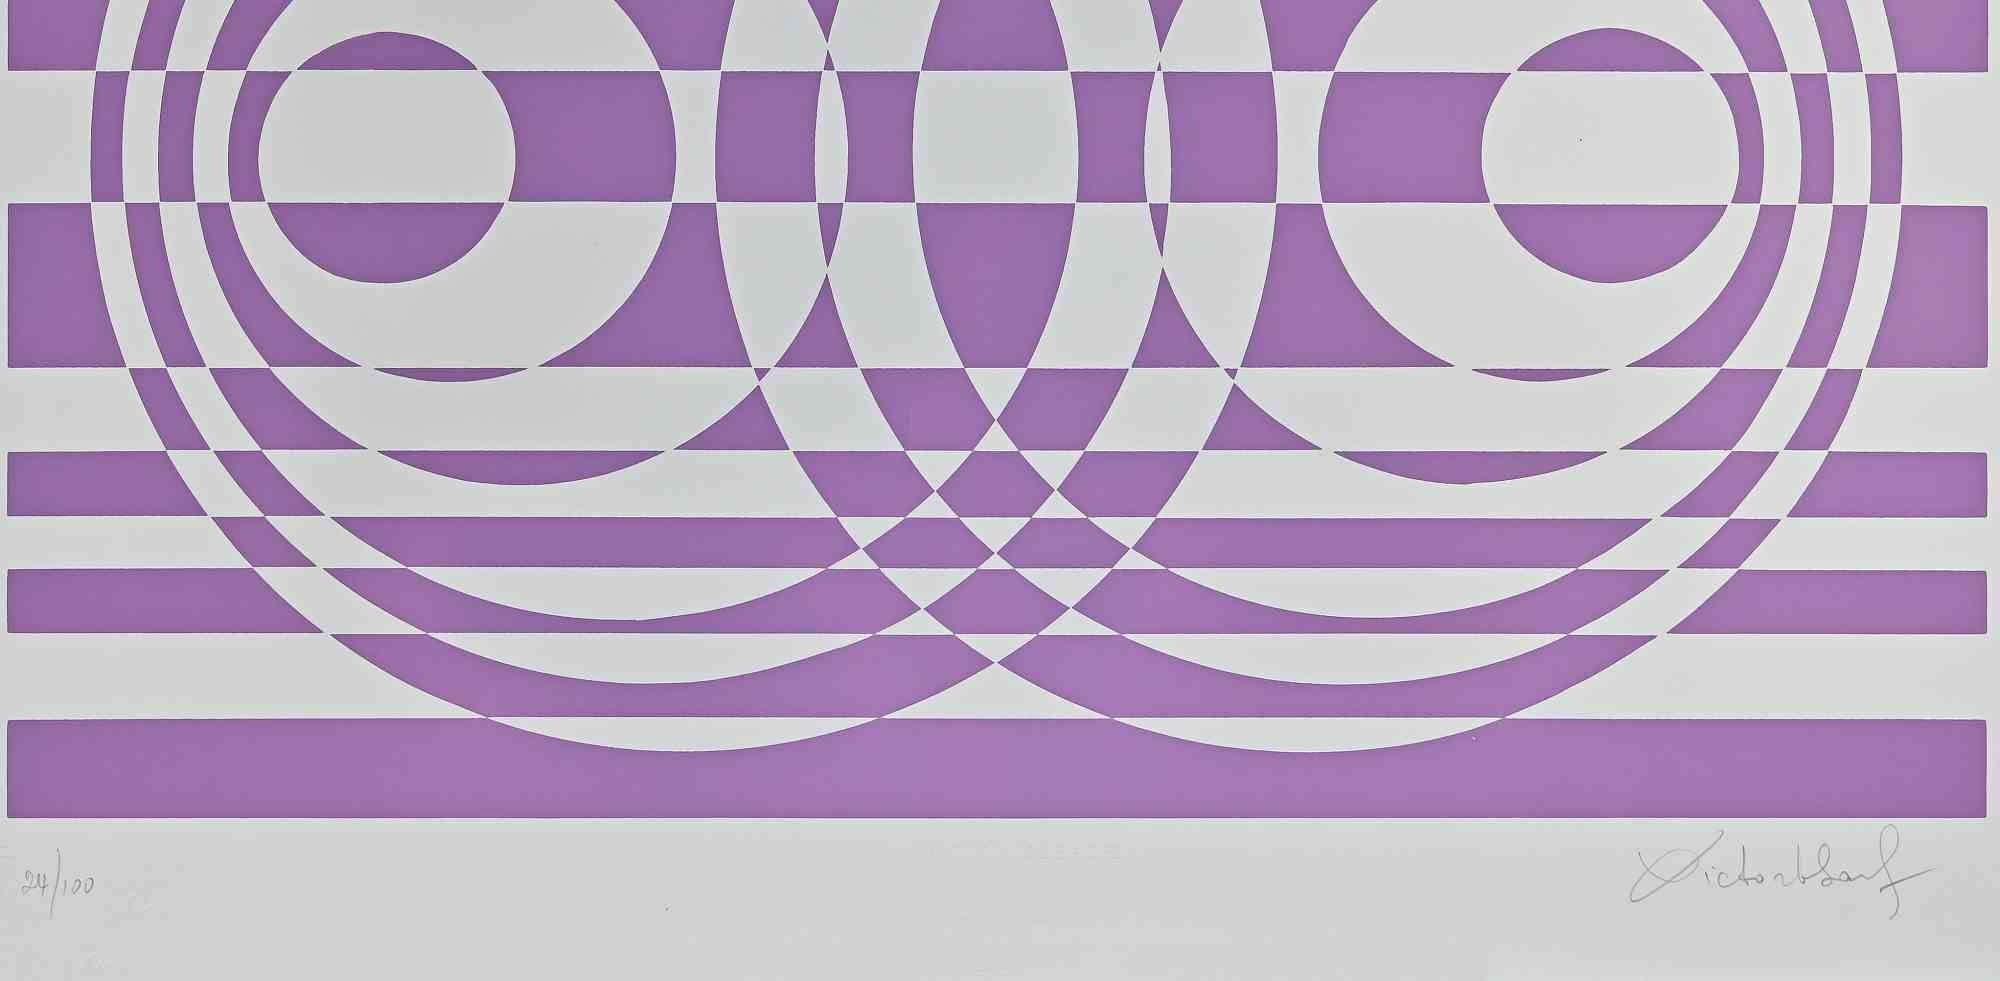 Composition abstraite violette - Impression sérigraphiée de V. Debach - 1970 - Print de Victor Debach